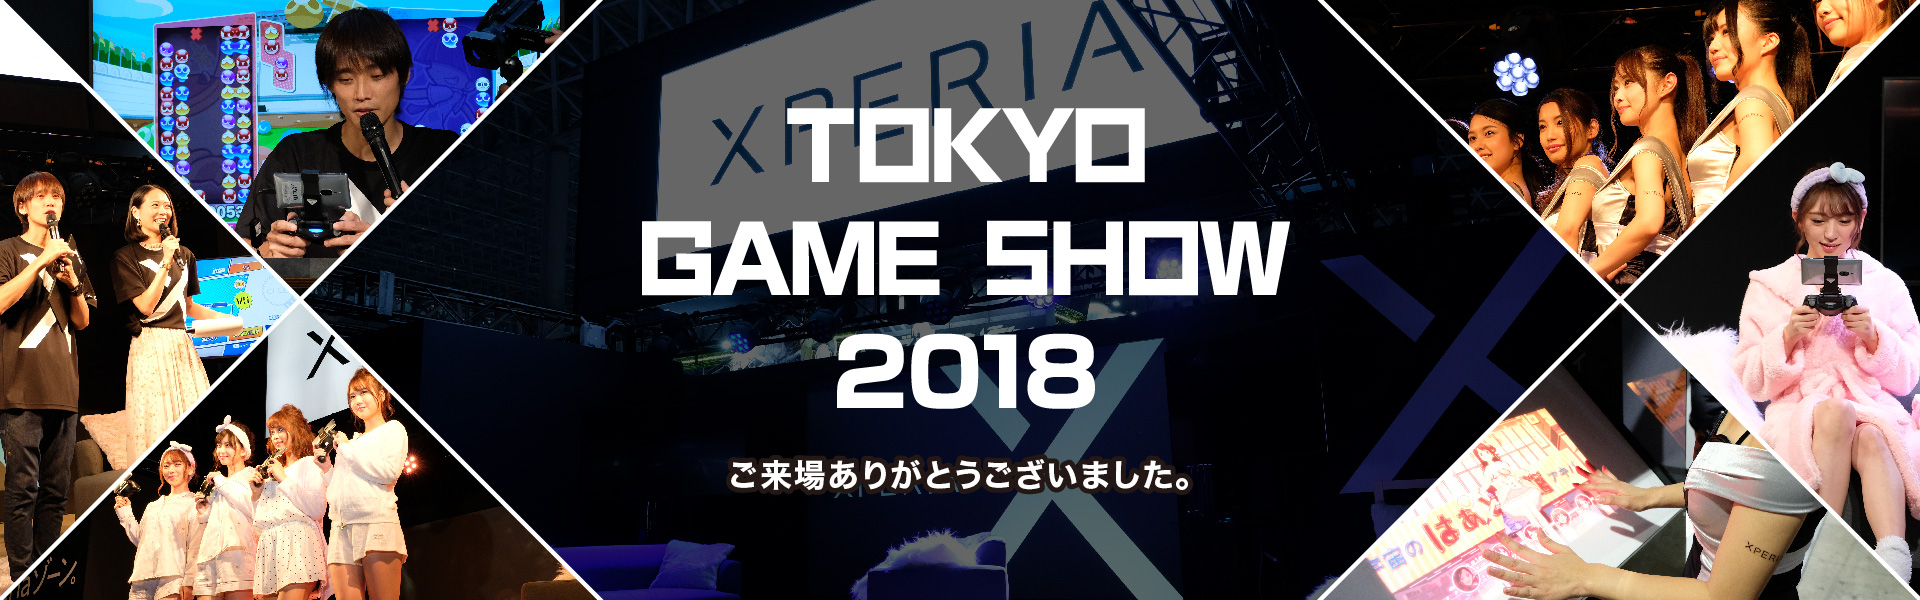 TOKYO GAME SHOW 2018 ご来場ありがとうございました。